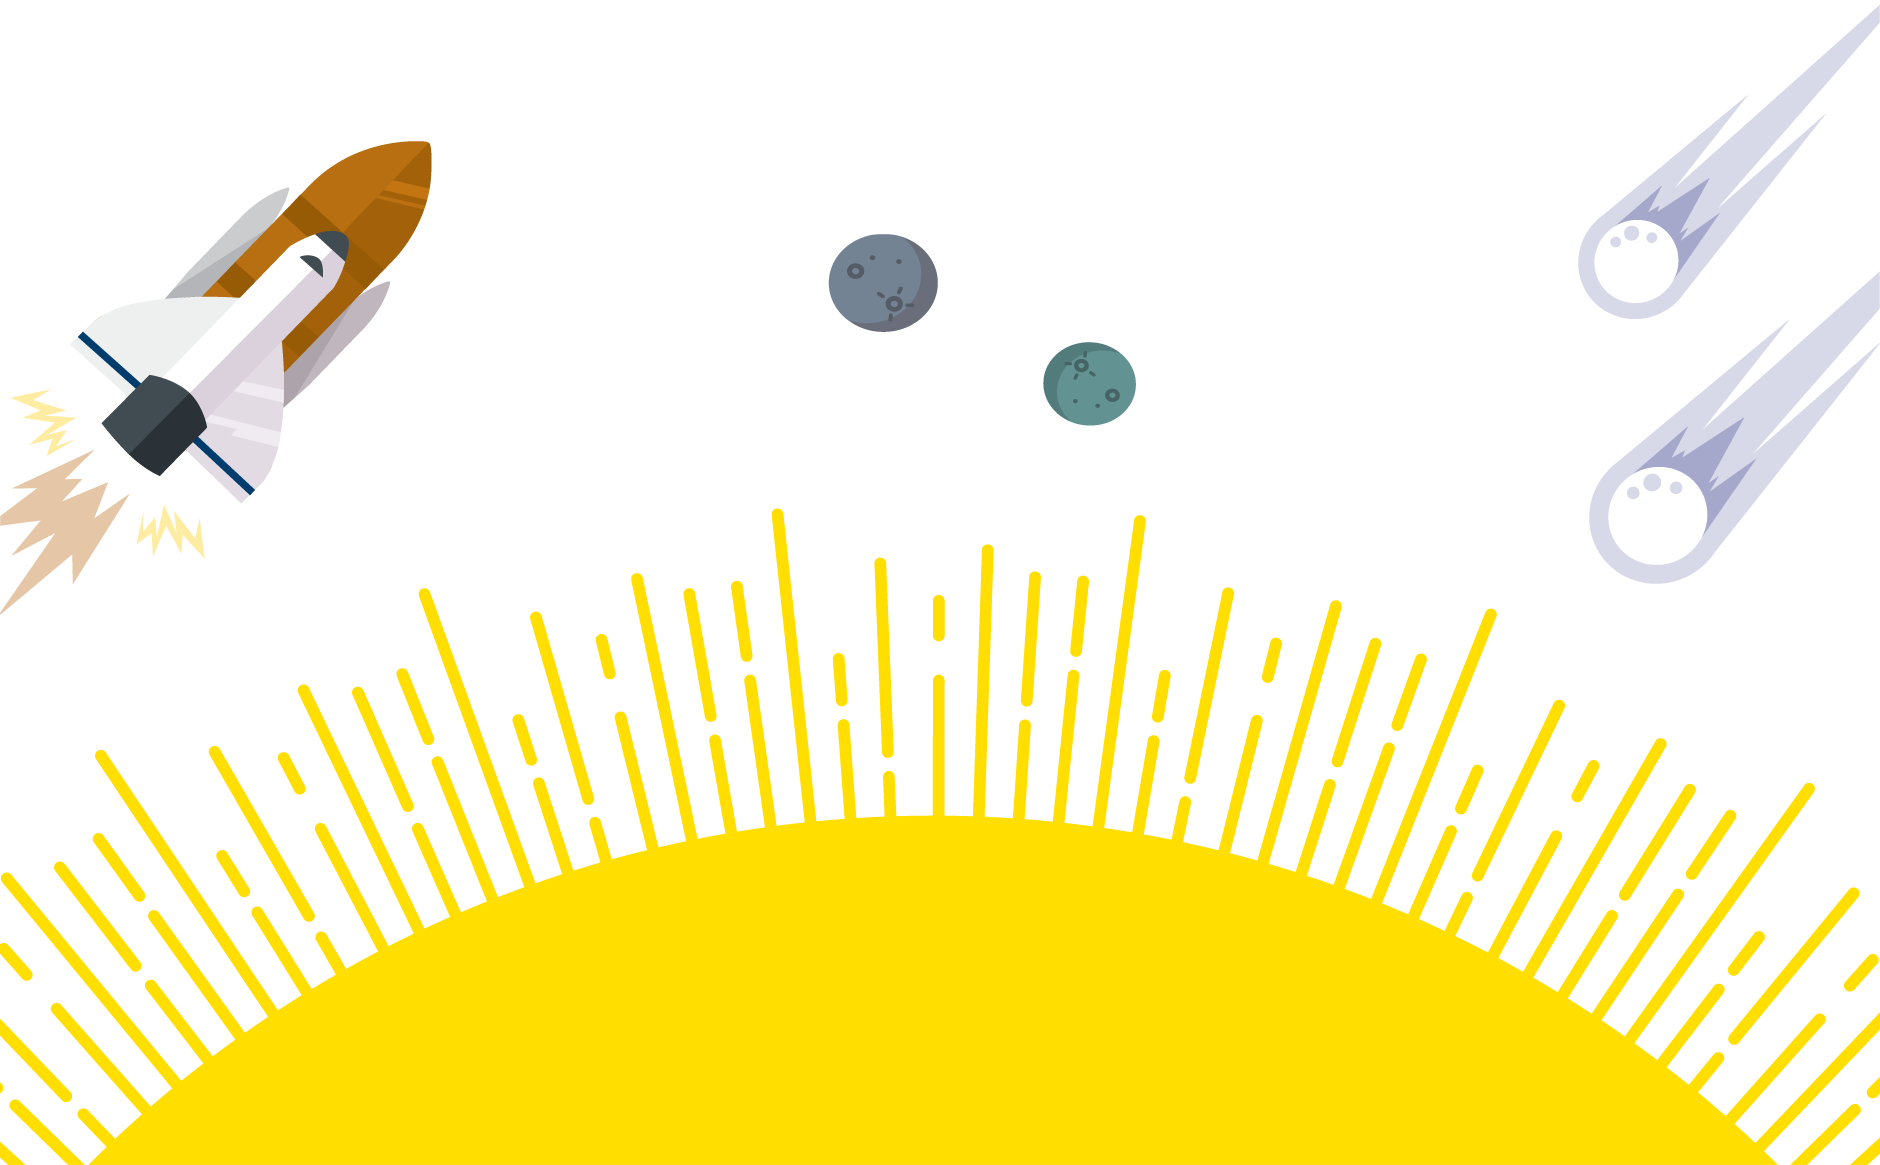 Rocket, sun, stars and comet illustration